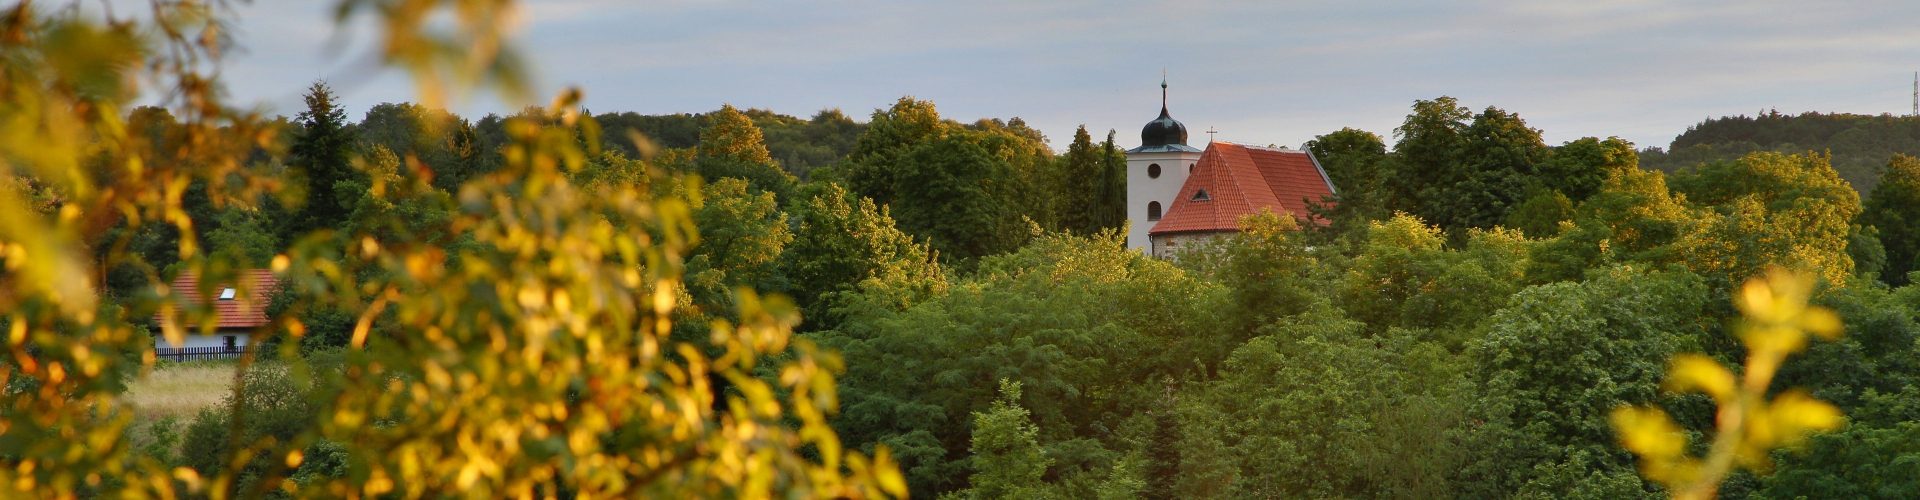 Levý Hradec a kostel sv. Klementa